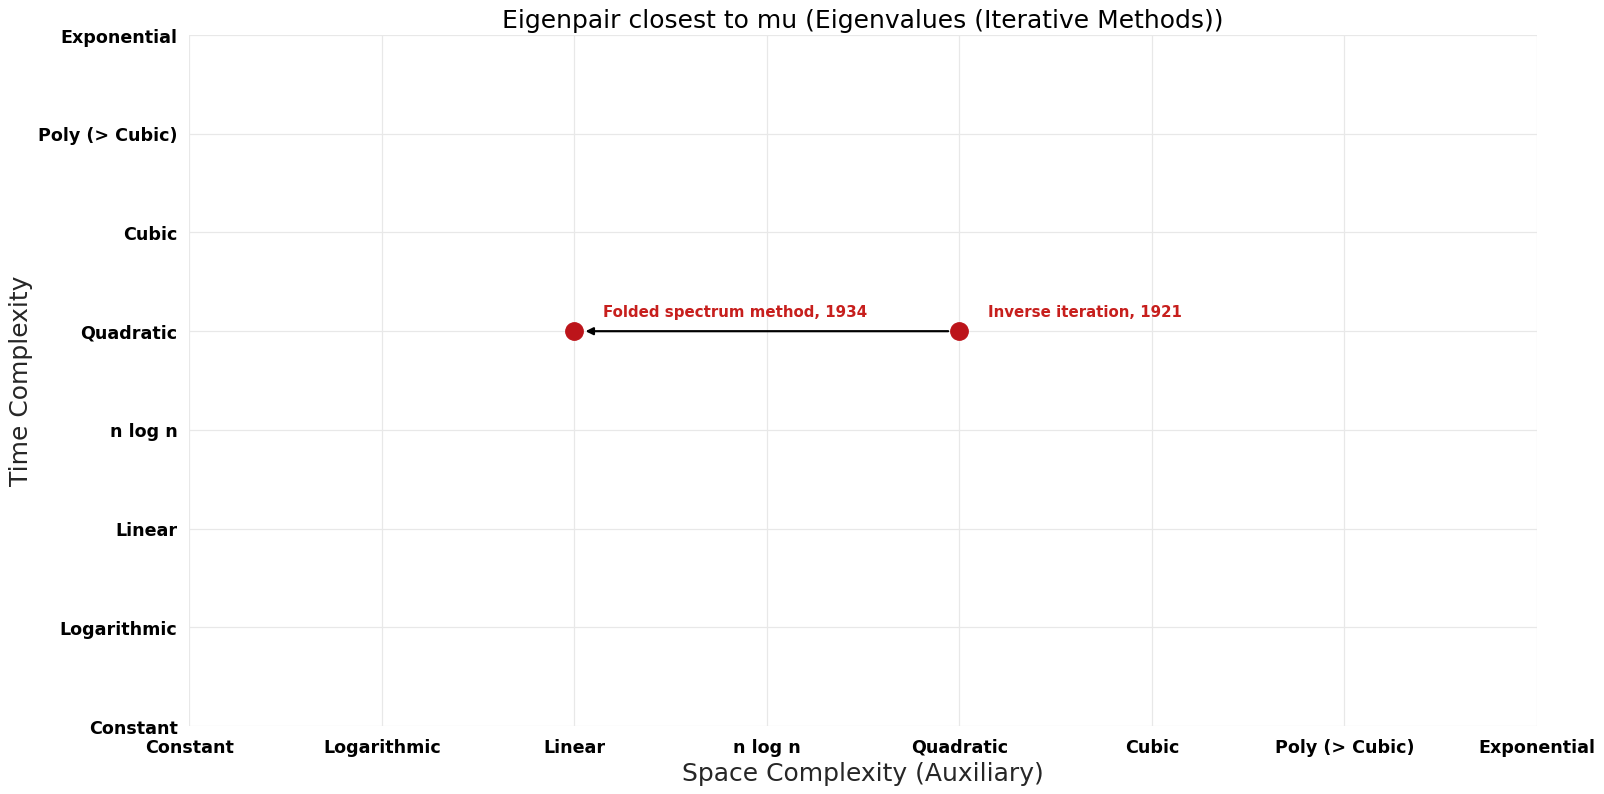 Eigenvalues (Iterative Methods) - Eigenpair closest to mu - Pareto Frontier.png